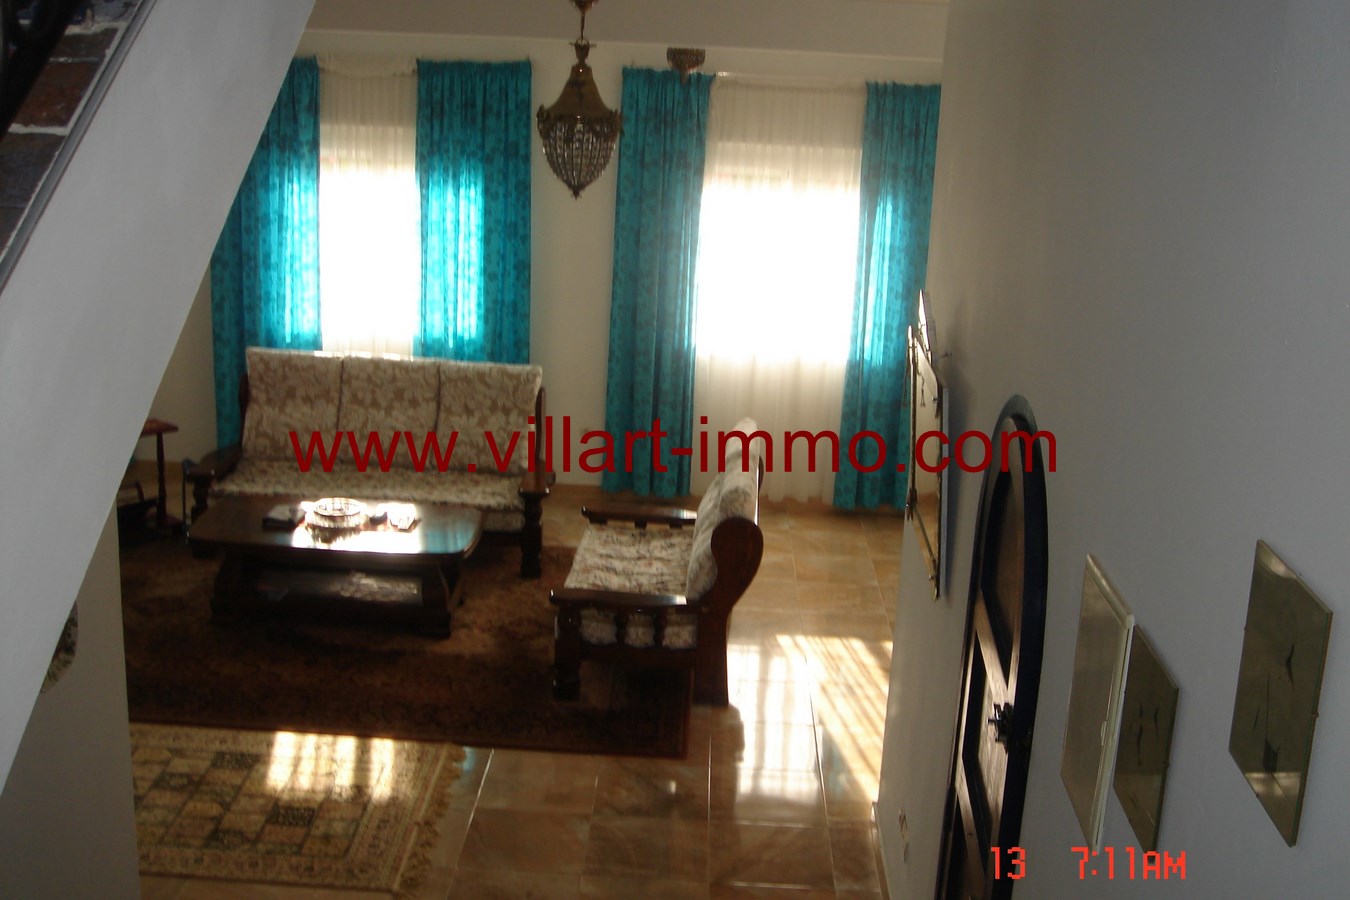 3-a-vendre-villa-tanger-hijriyin-salon-vv430-villart-immo